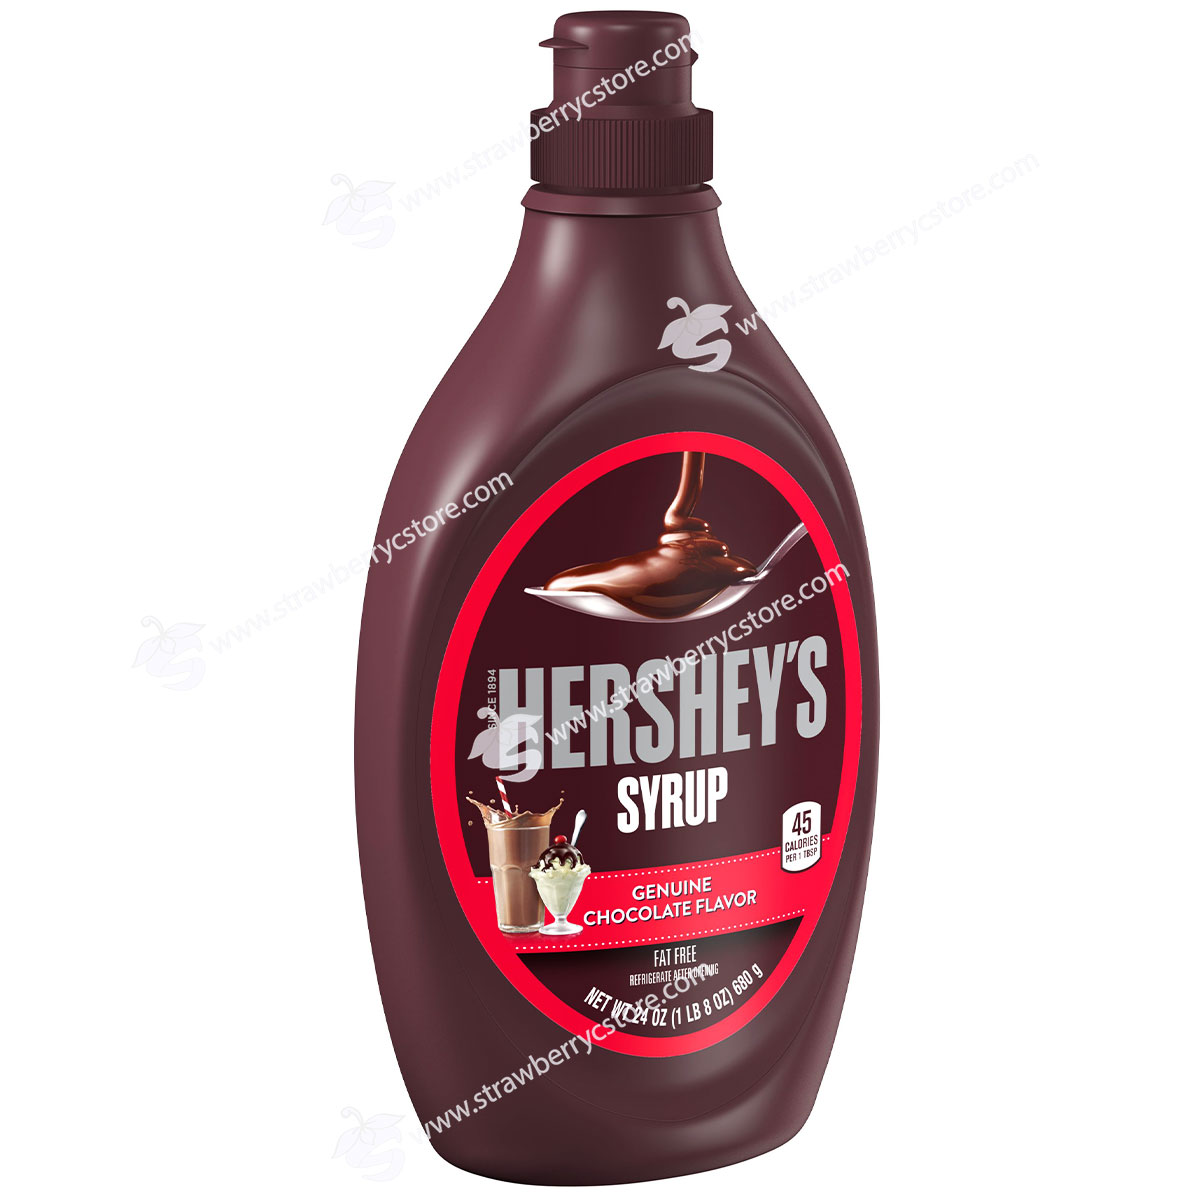 Siro Socola Dạng Sệt Hershey s Syrup Genuine Chocolate Flavor